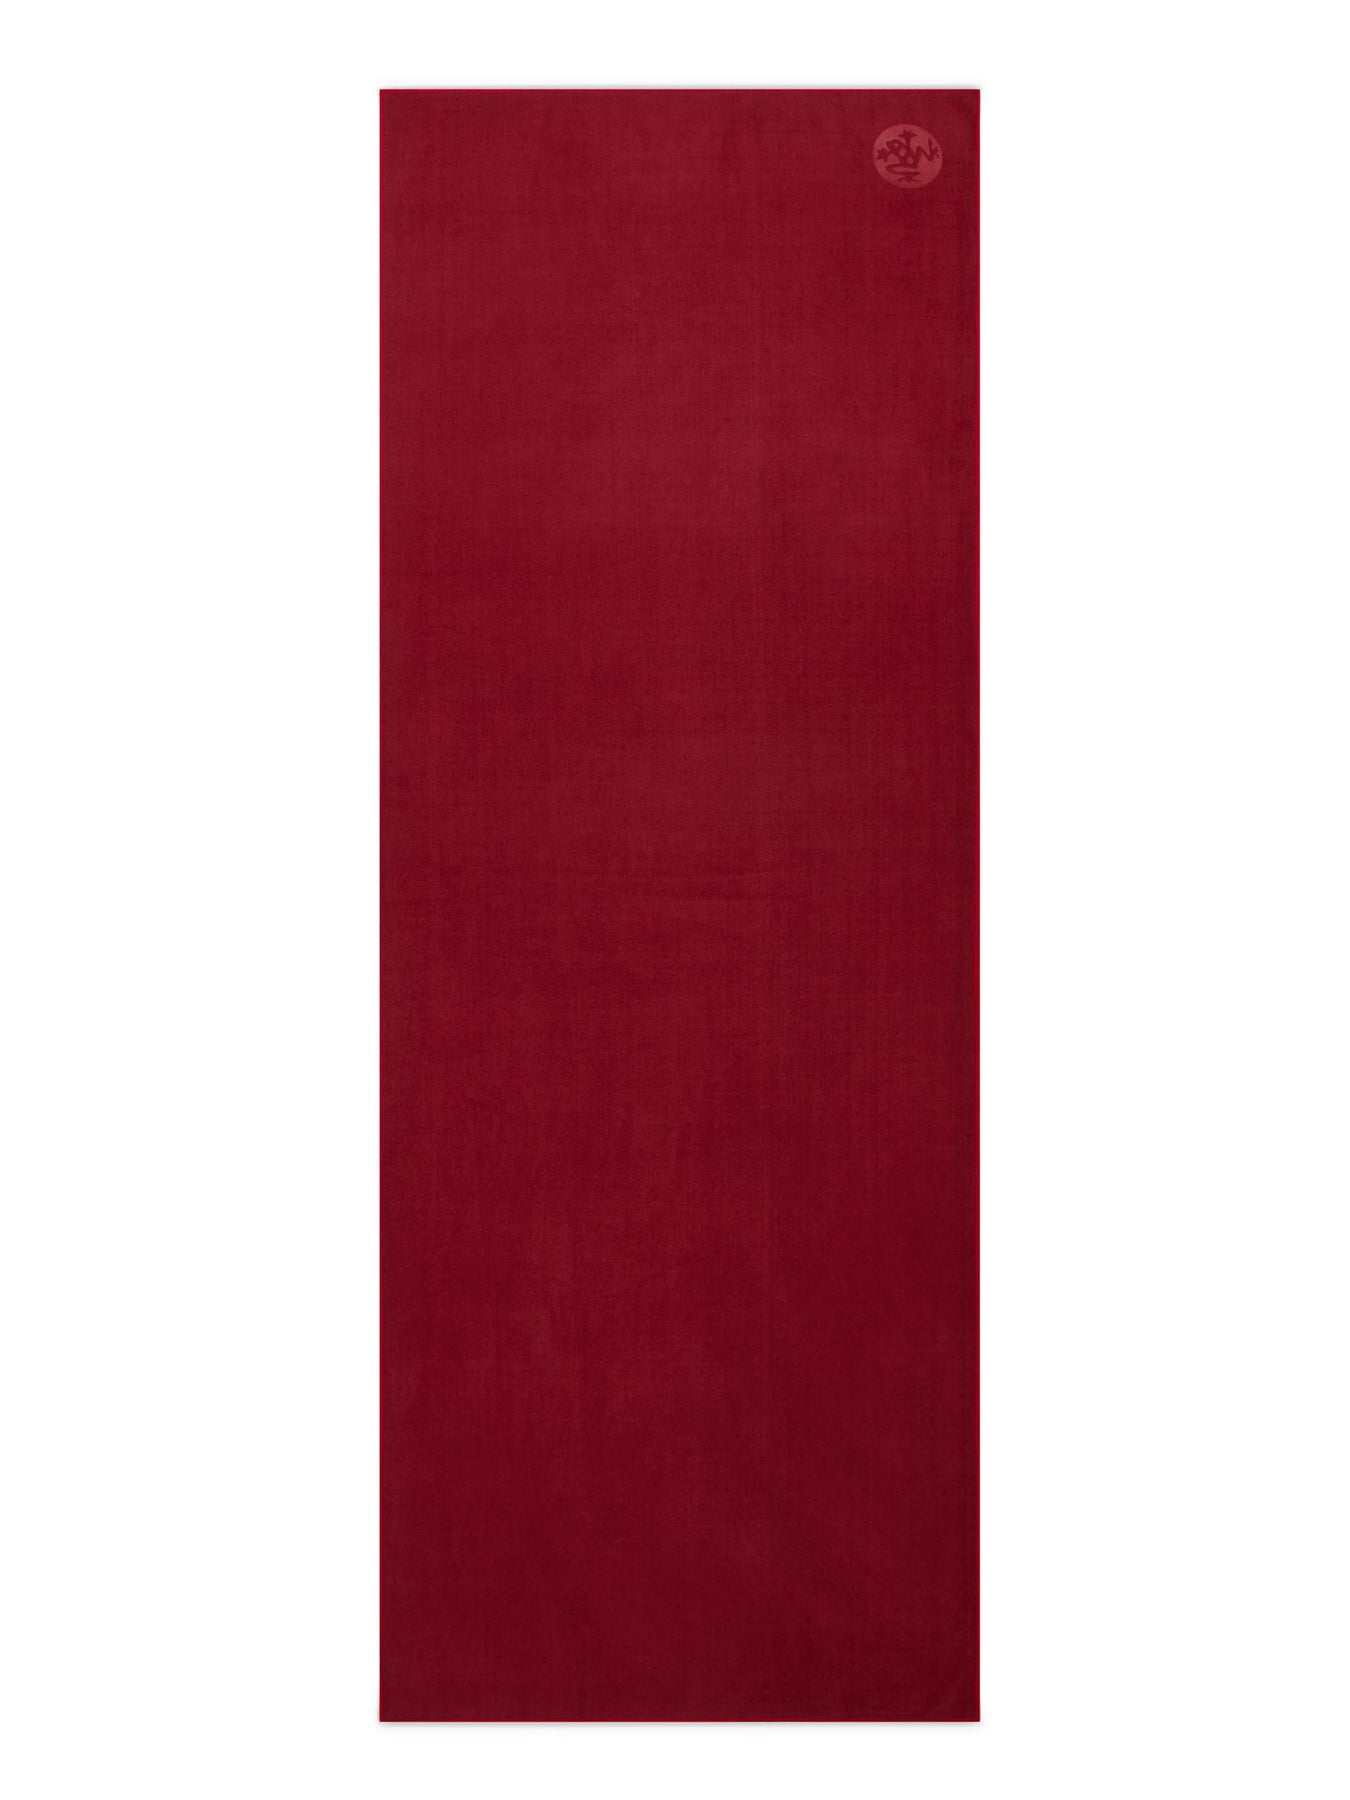 Manduka eQua mat towel-Standard size-183*67CM-Magic - Shop